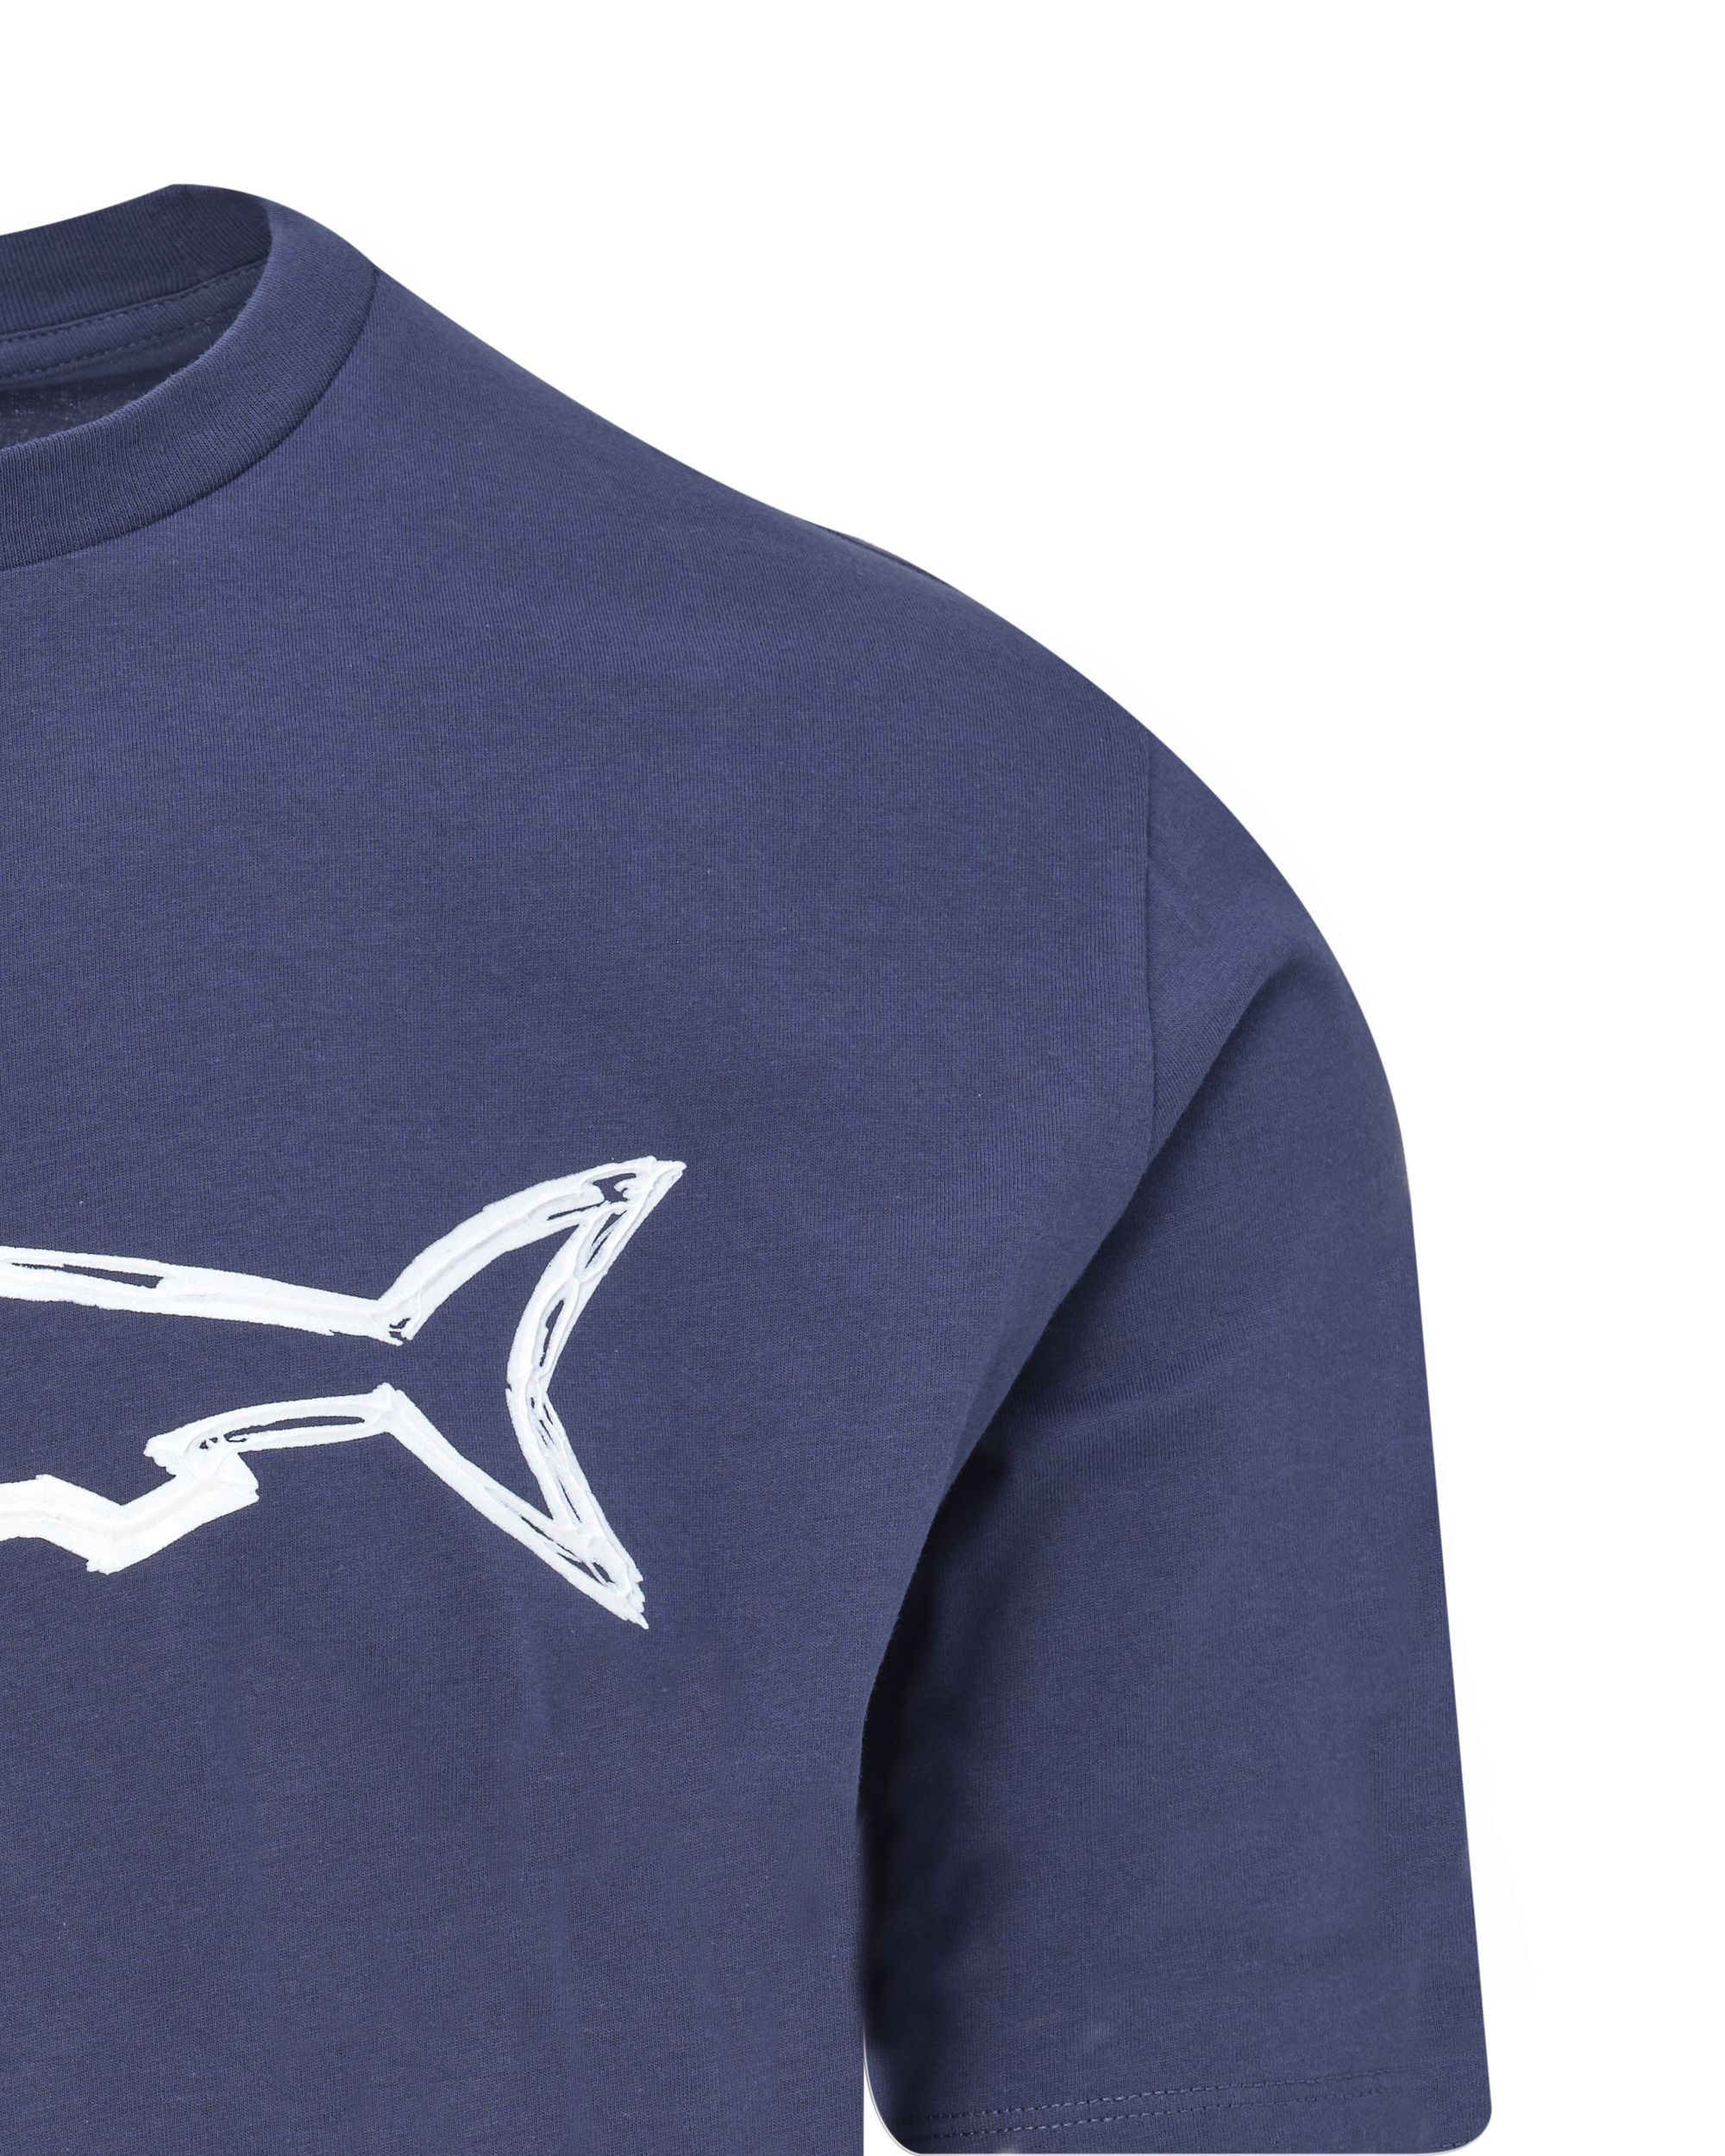 Paul & Shark T-shirt KM Donker blauw 083343-001-L